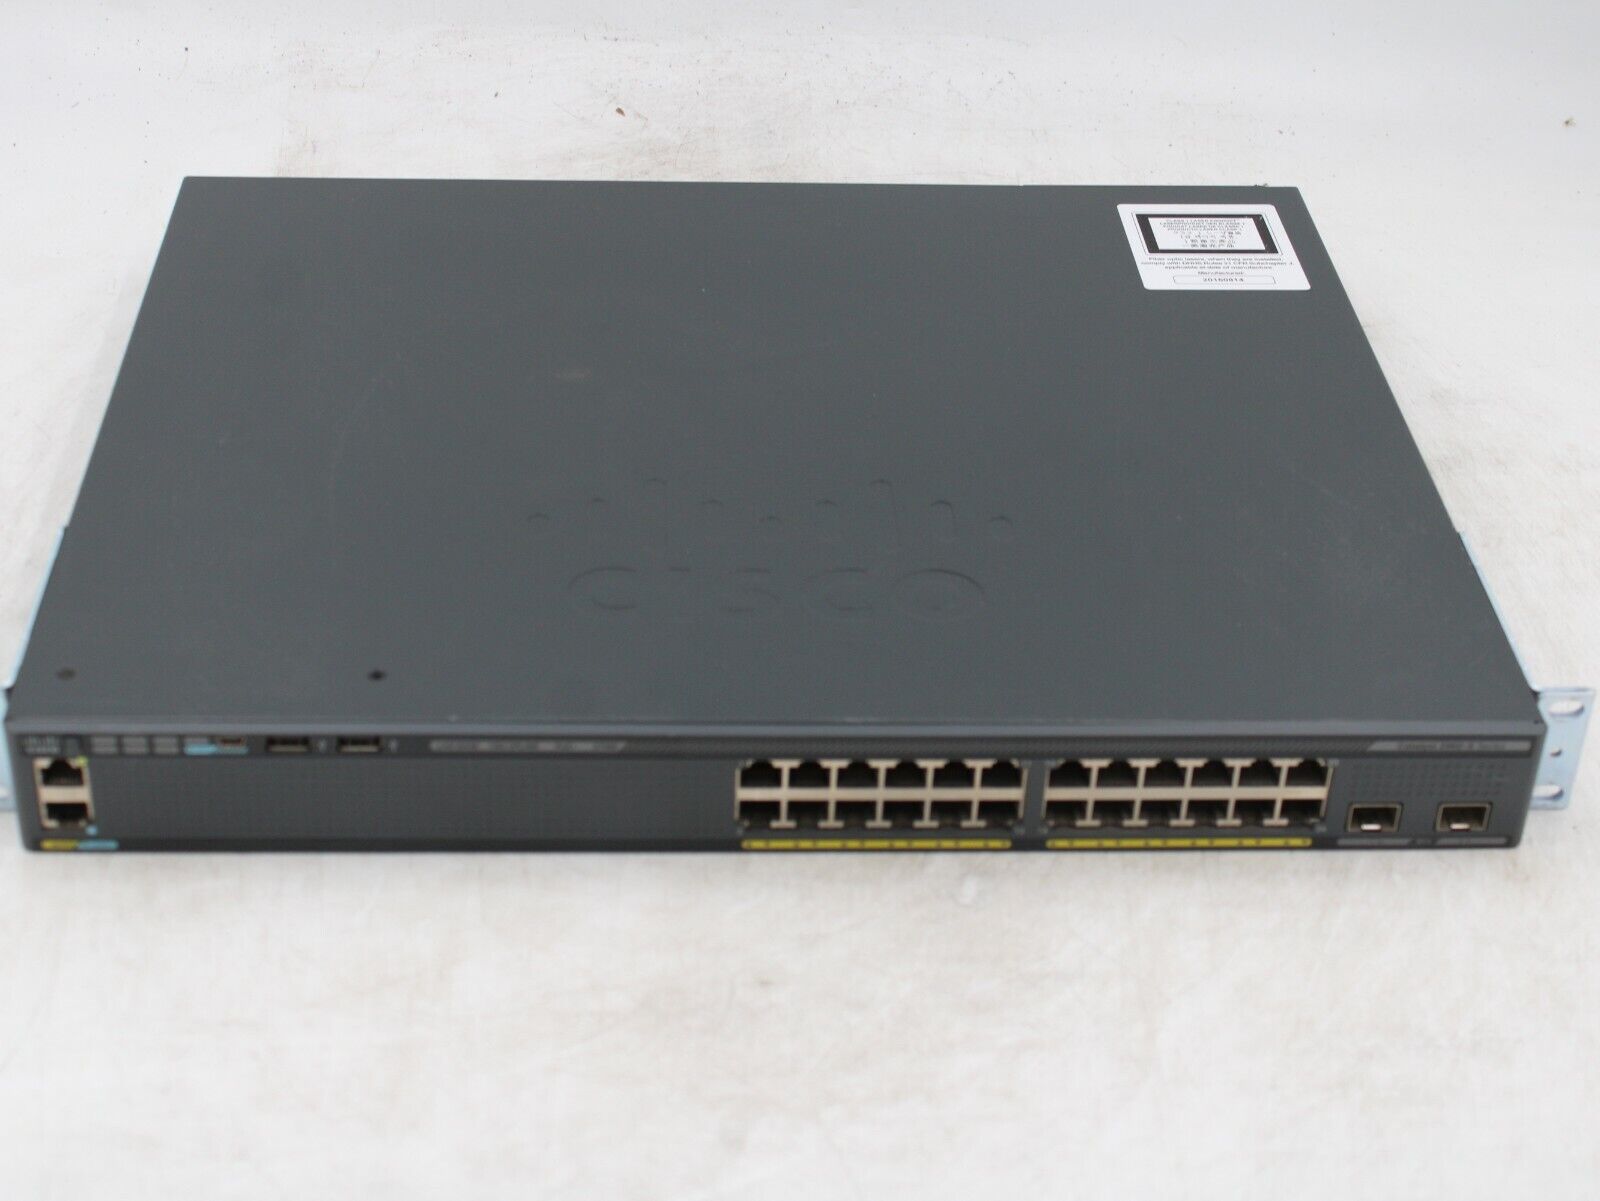 Cisco Catalyst 2960X WS-C2960X-24PD-L 24 Port Gigabit Network Switch TESTED